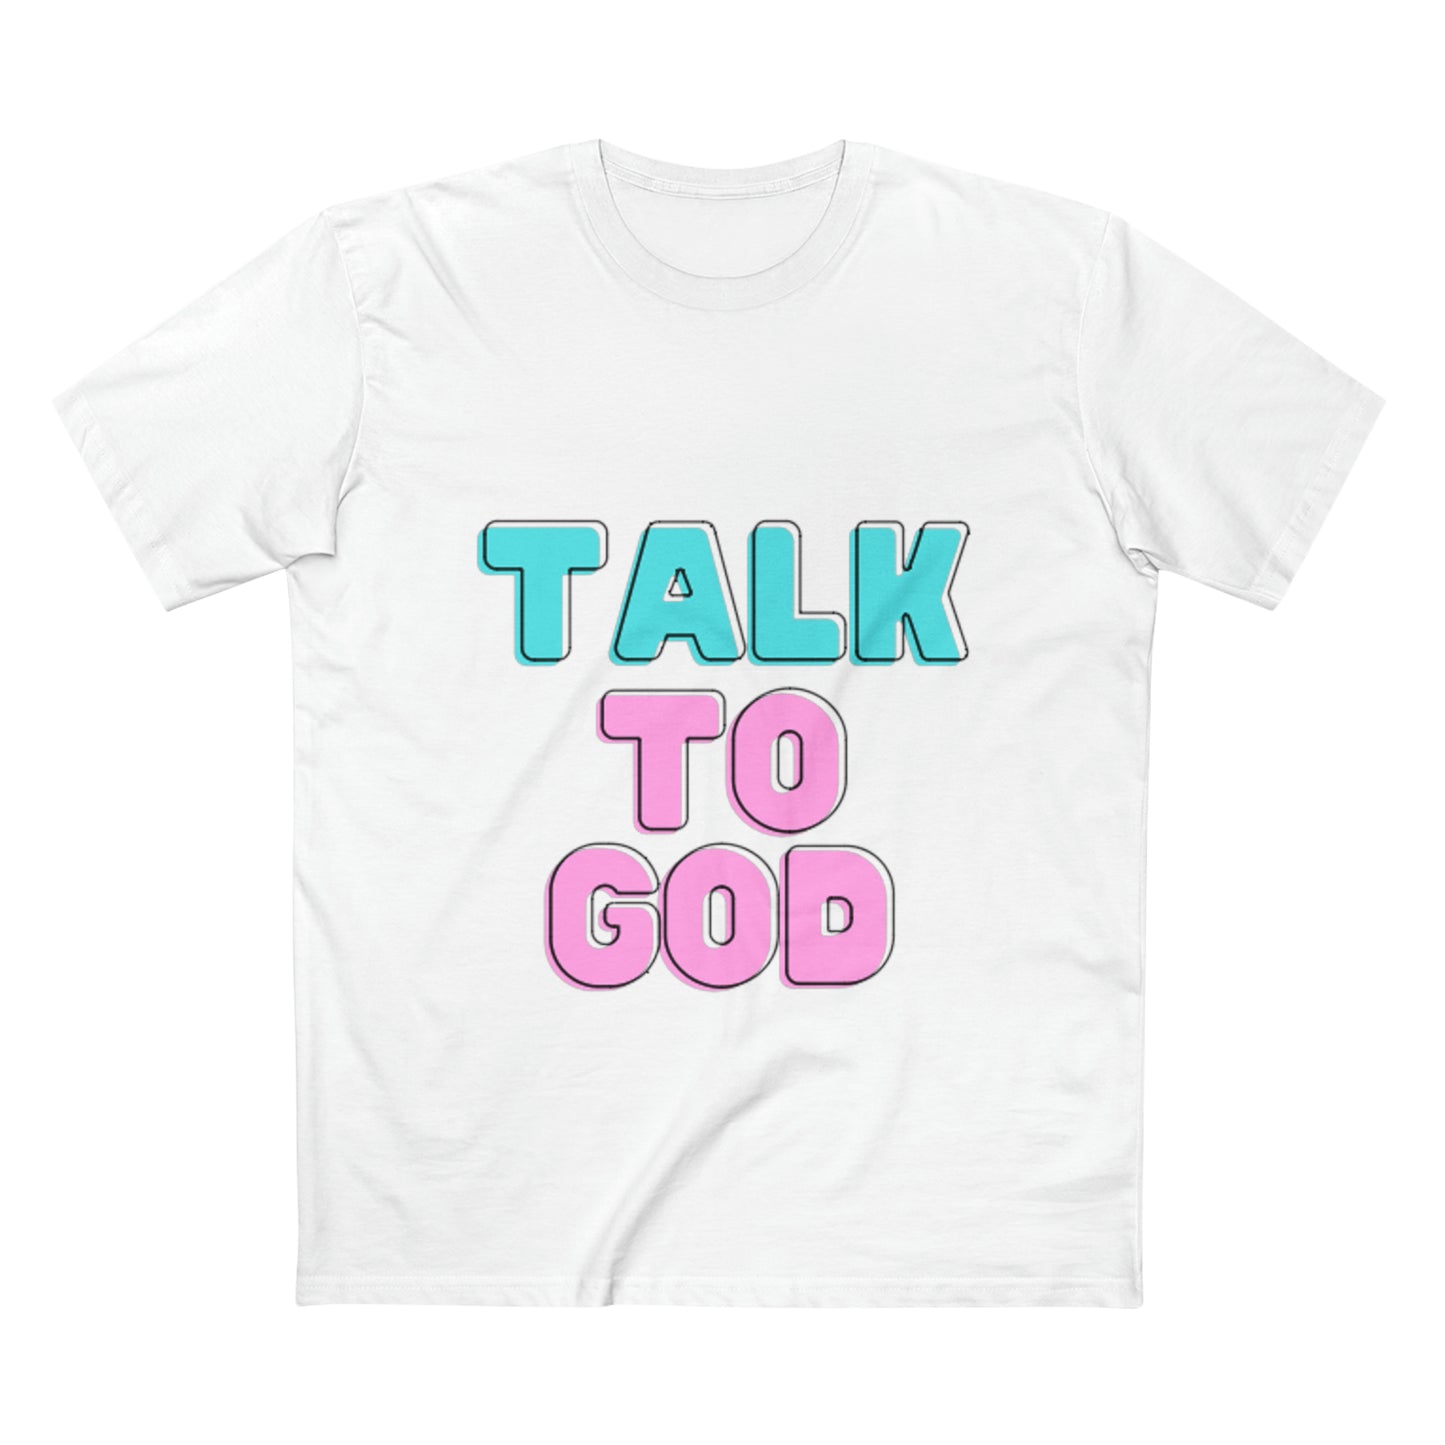 TALK TO GOD TEE SHIRT